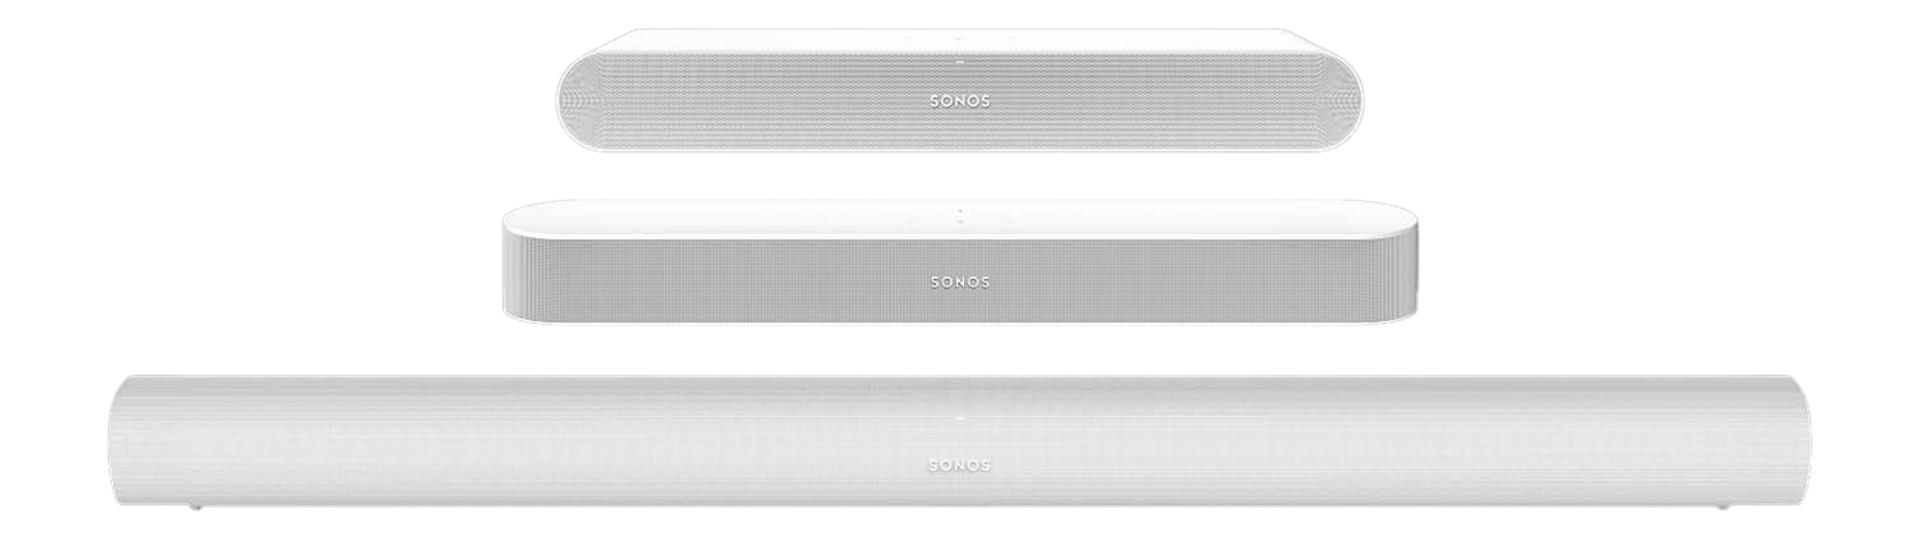 Sonos Arc vs. Sonos Beam